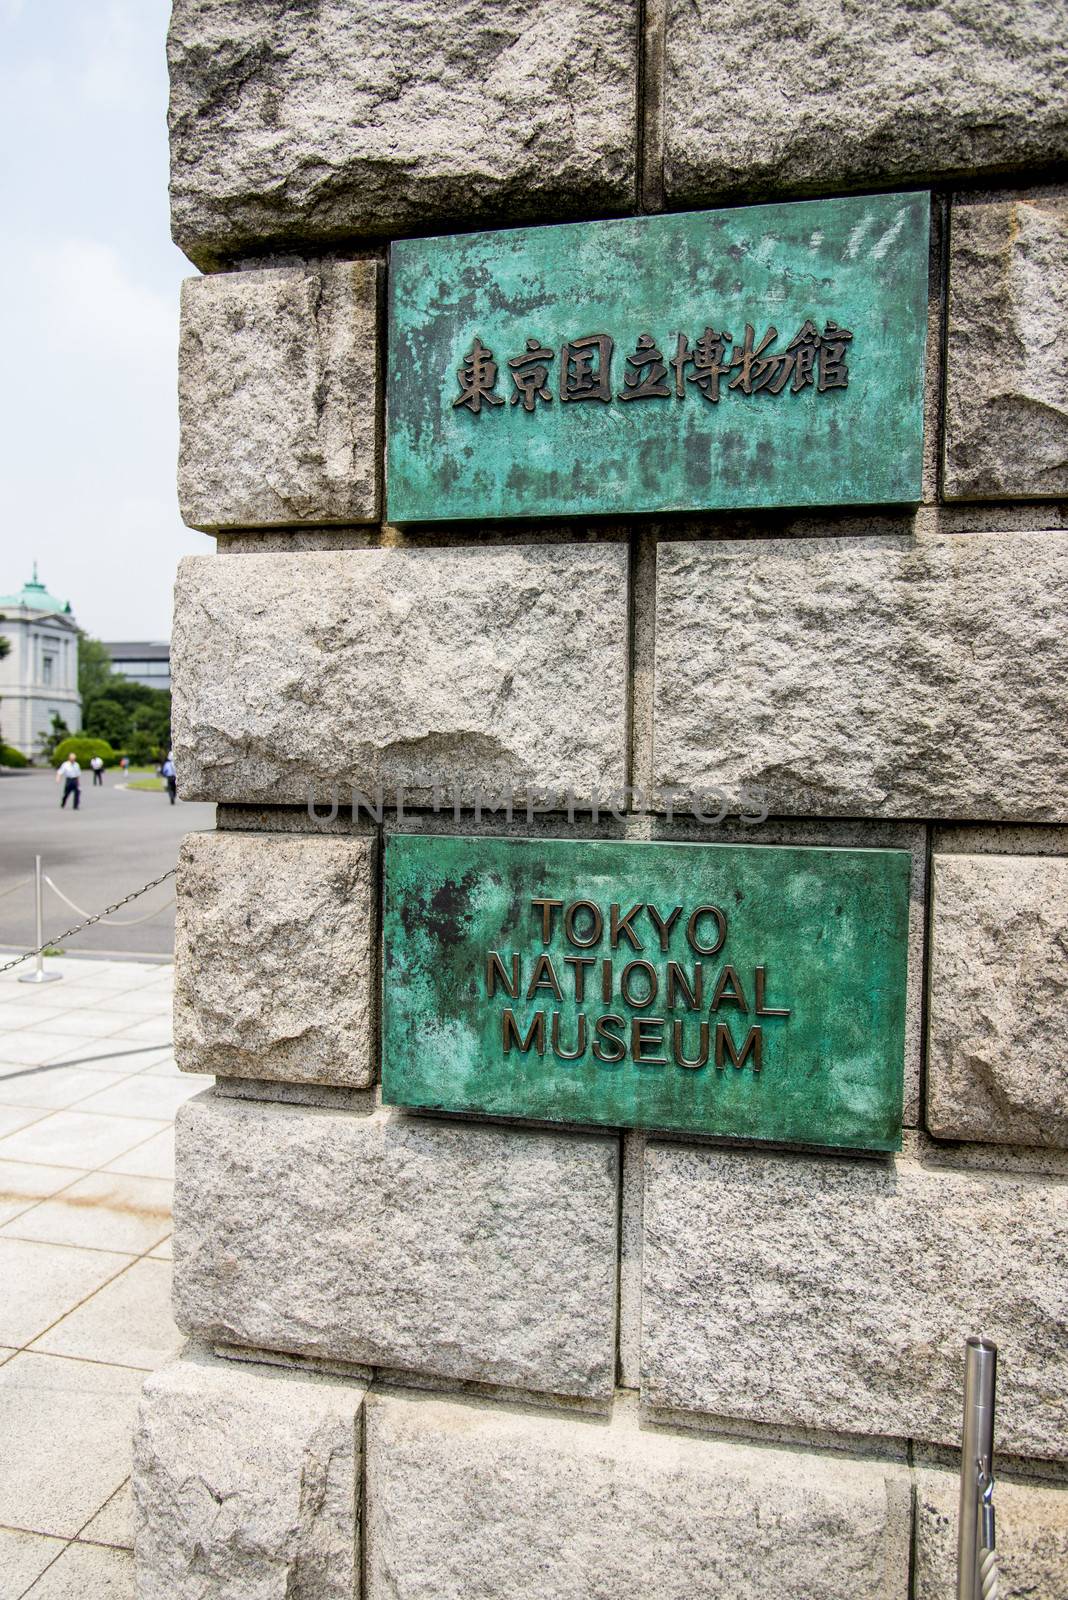 Tokyo National Museum sign by gjeerawut